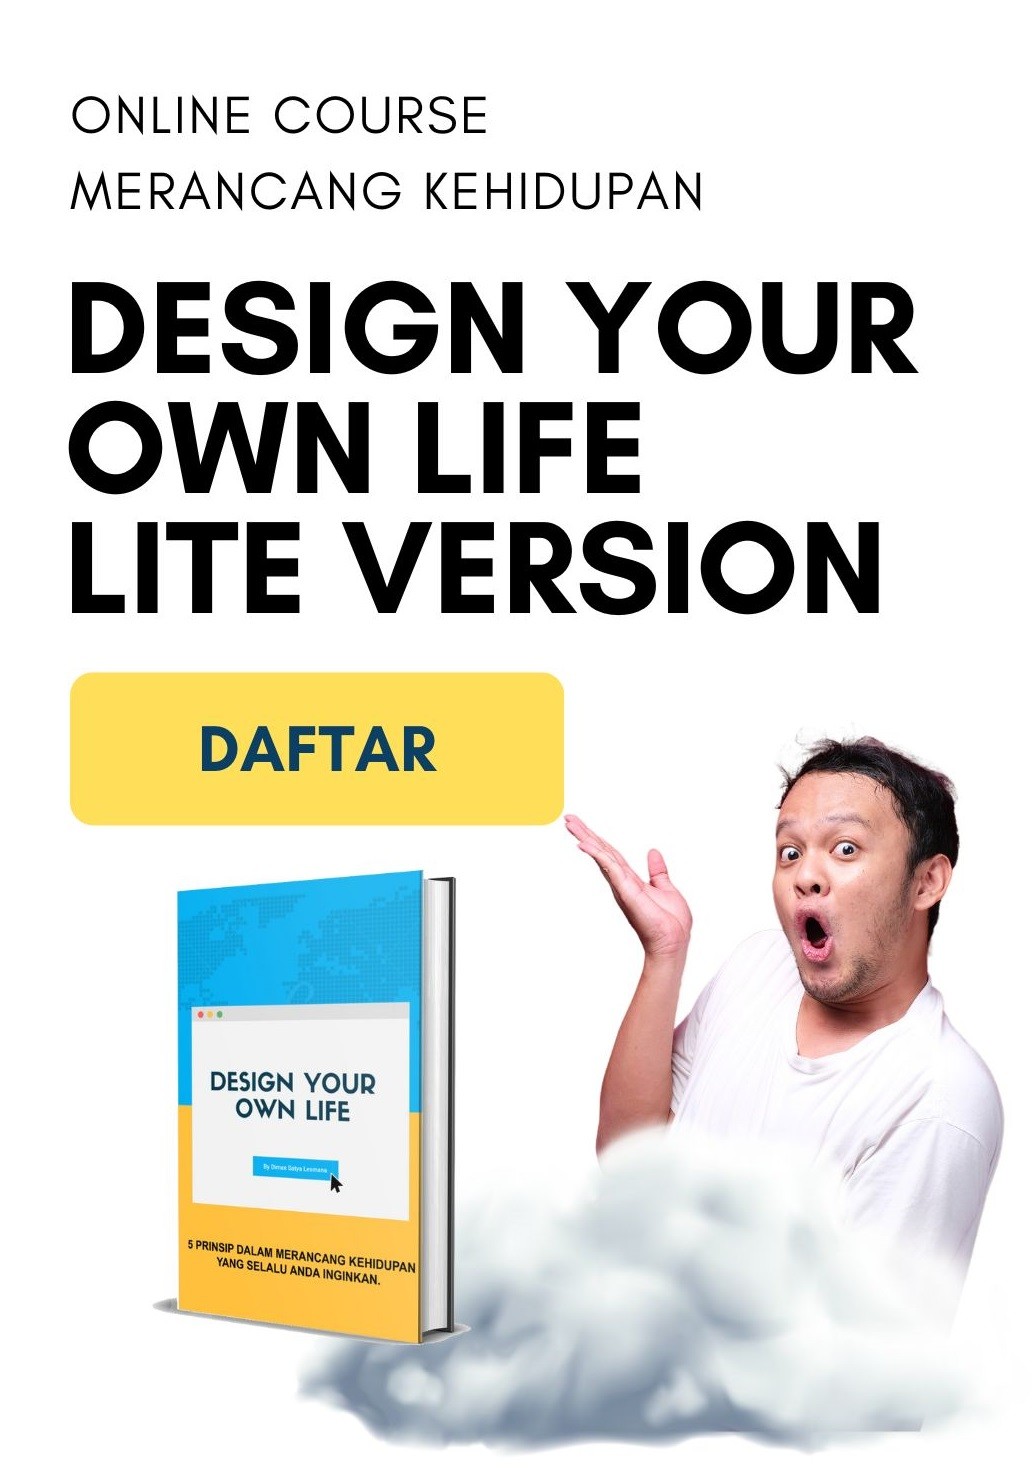 Design Your Own Life - Lite Version